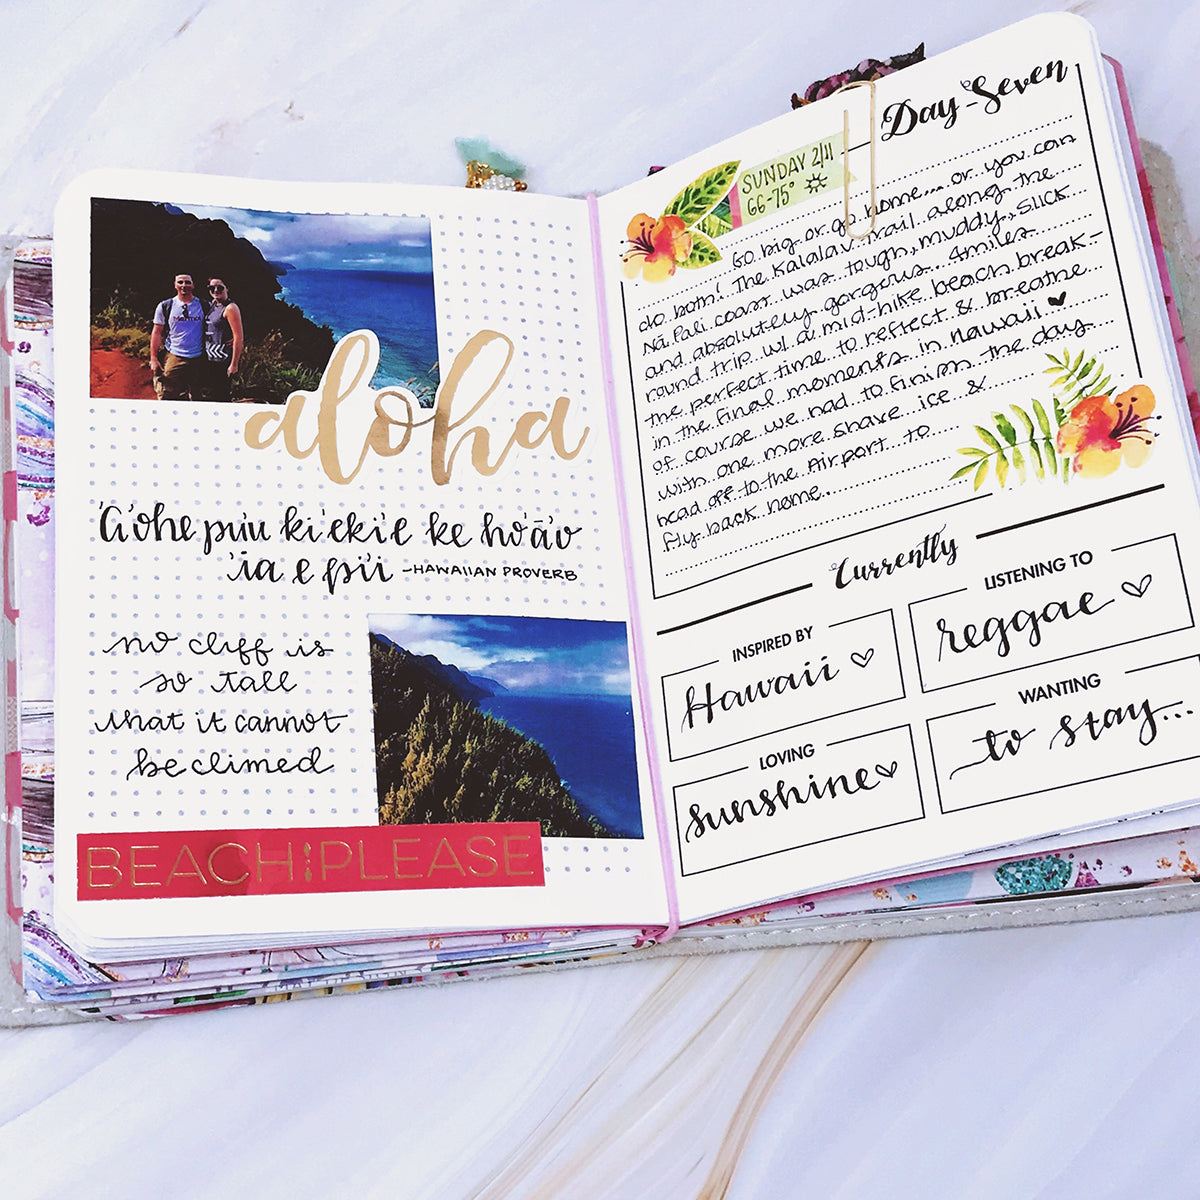 My Travel Journal de Little Travel Memories Co